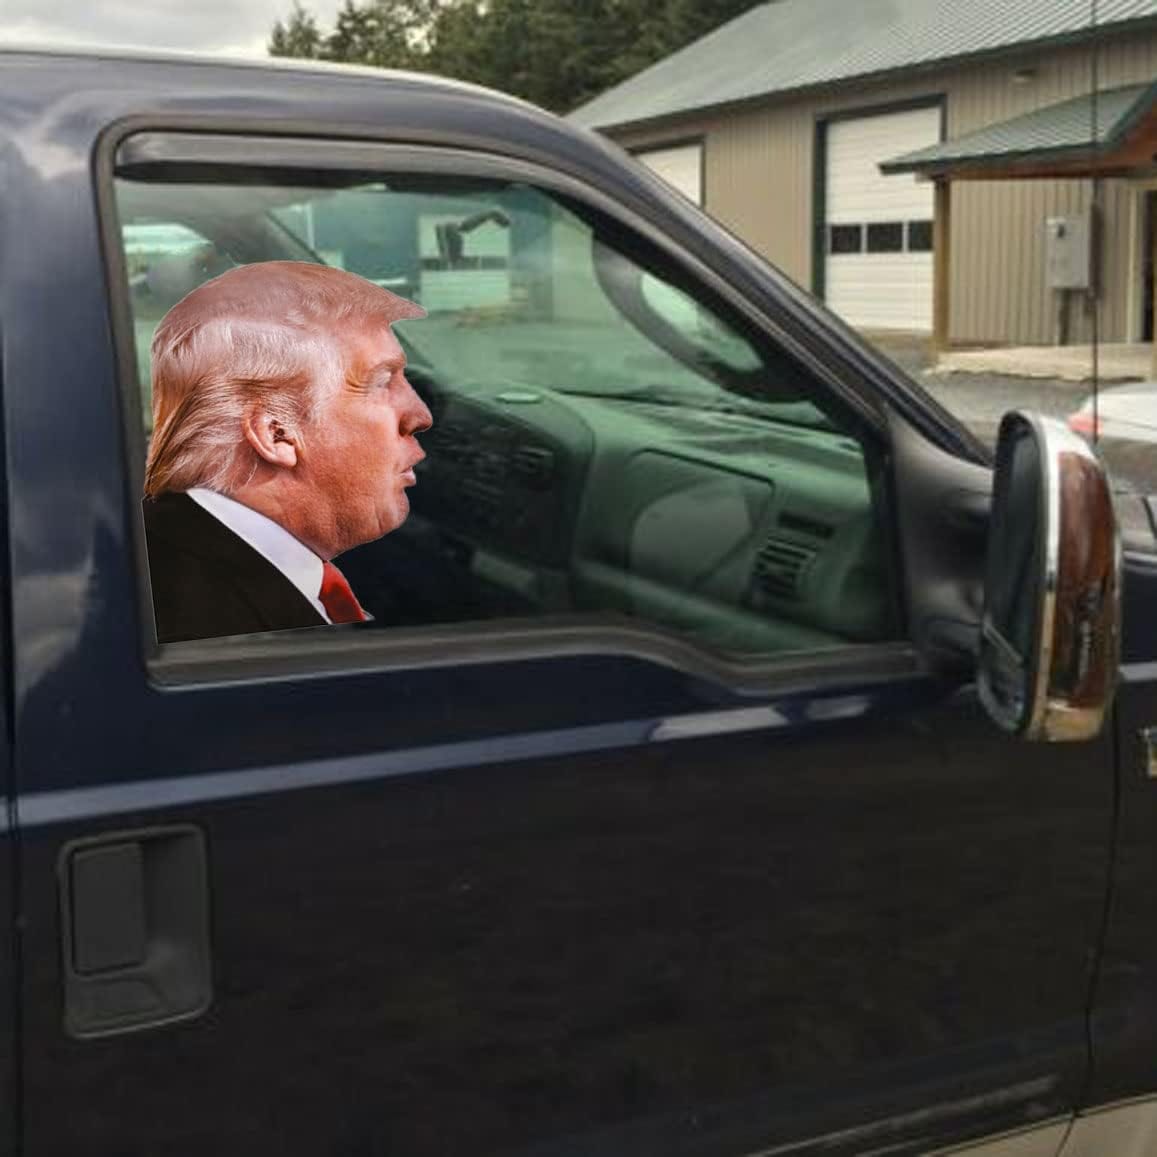 Trump Automotive Window Decal's